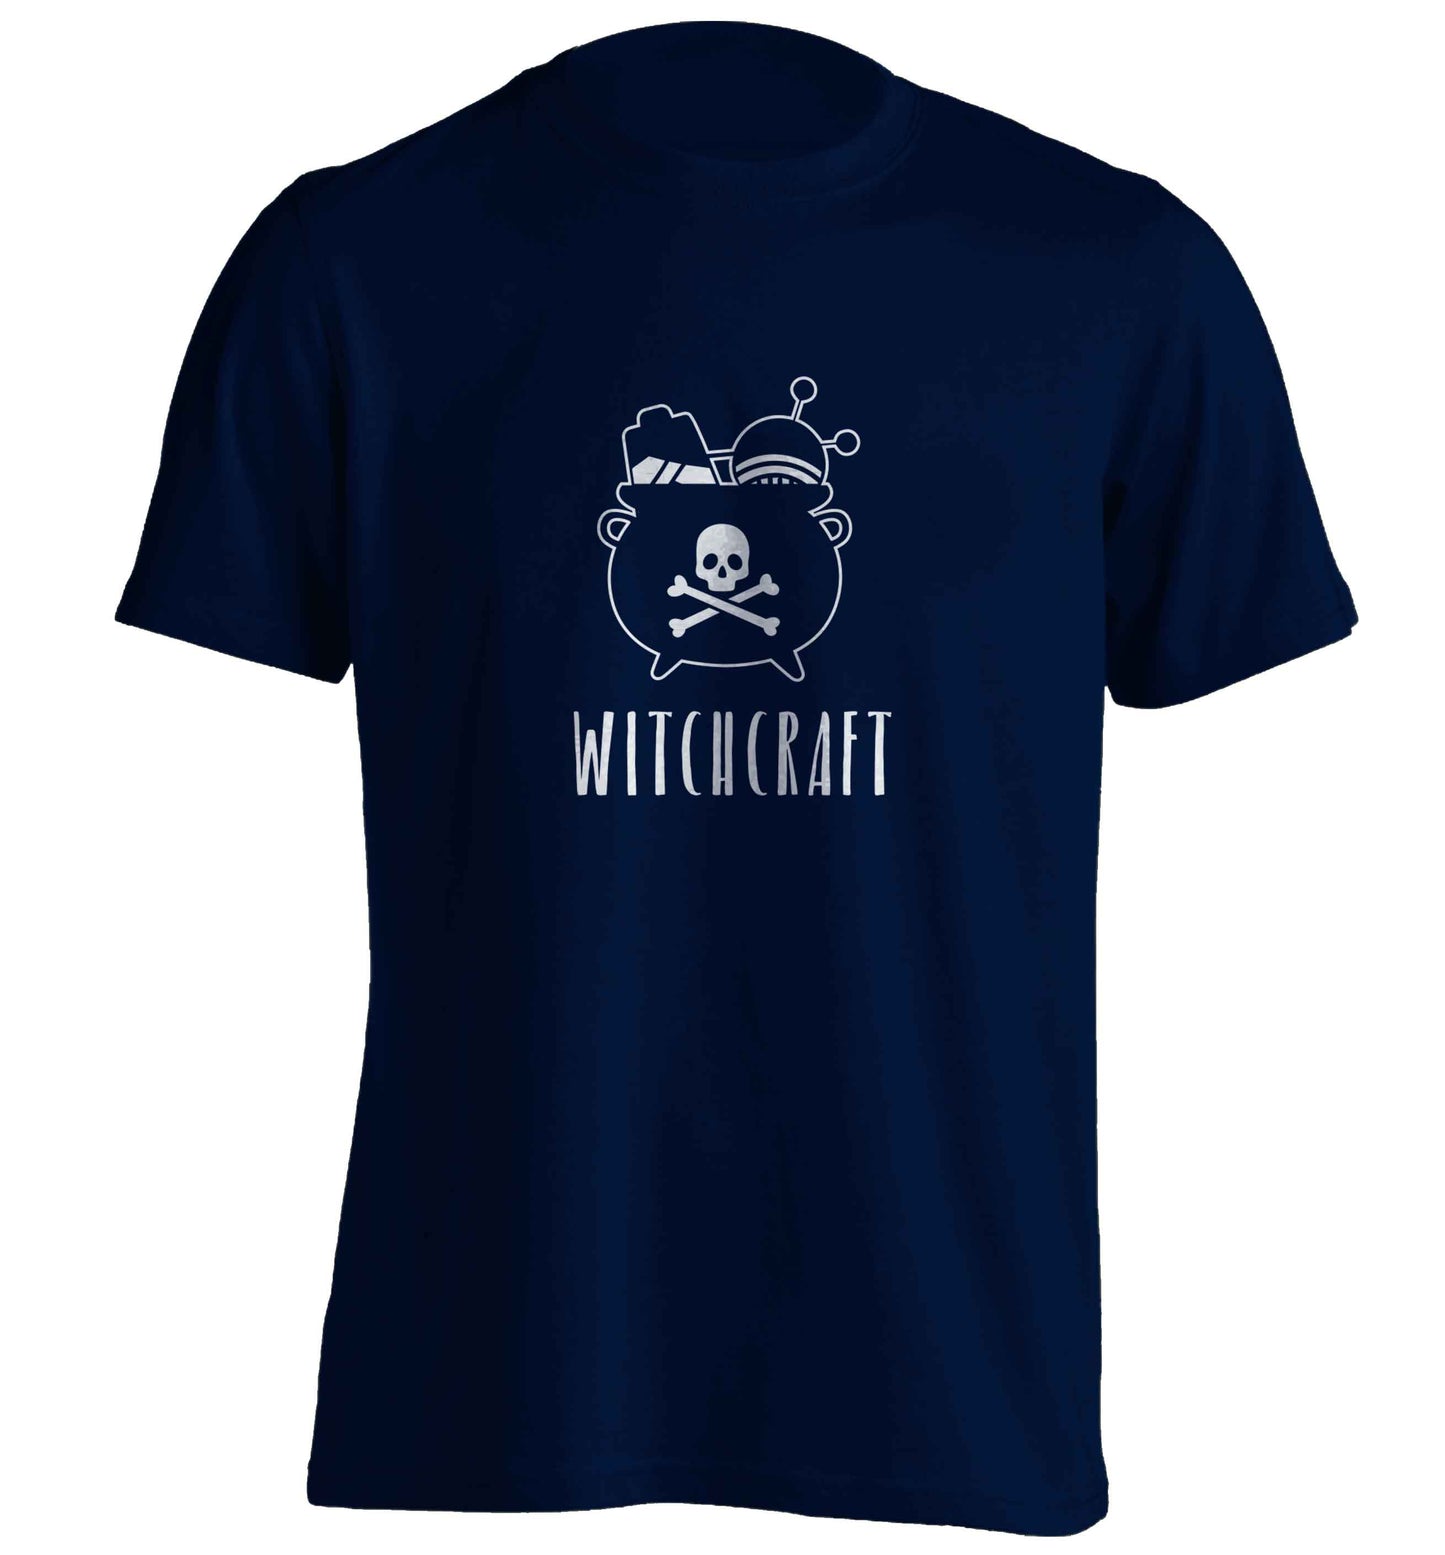 Witchcraft adults unisex navy Tshirt 2XL